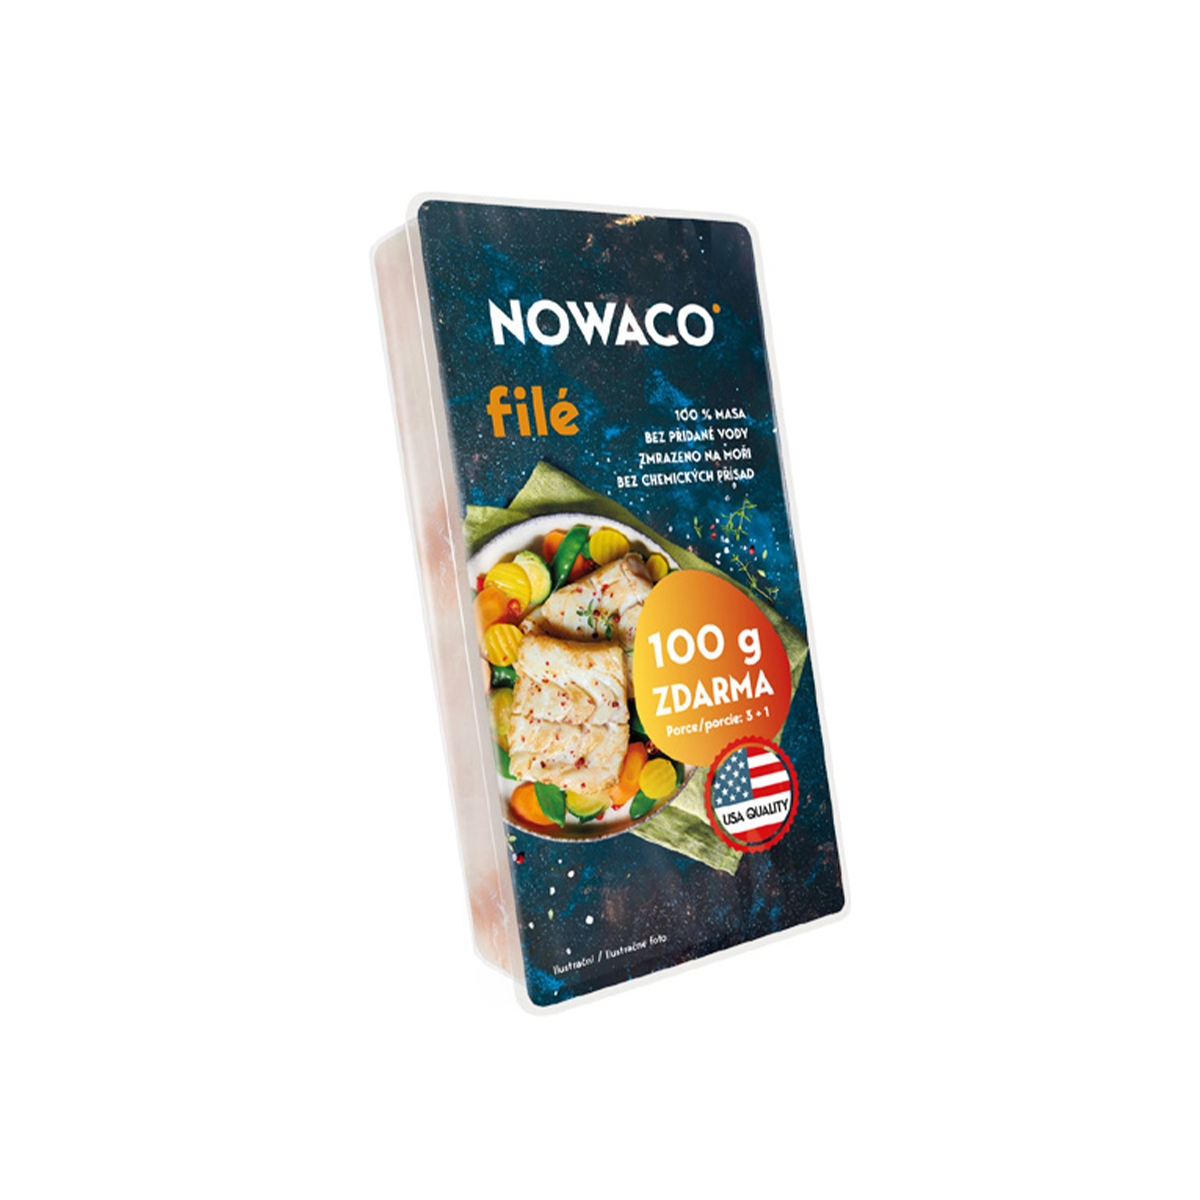 Rybí filé Nowaco 300 g+100 g zdarma